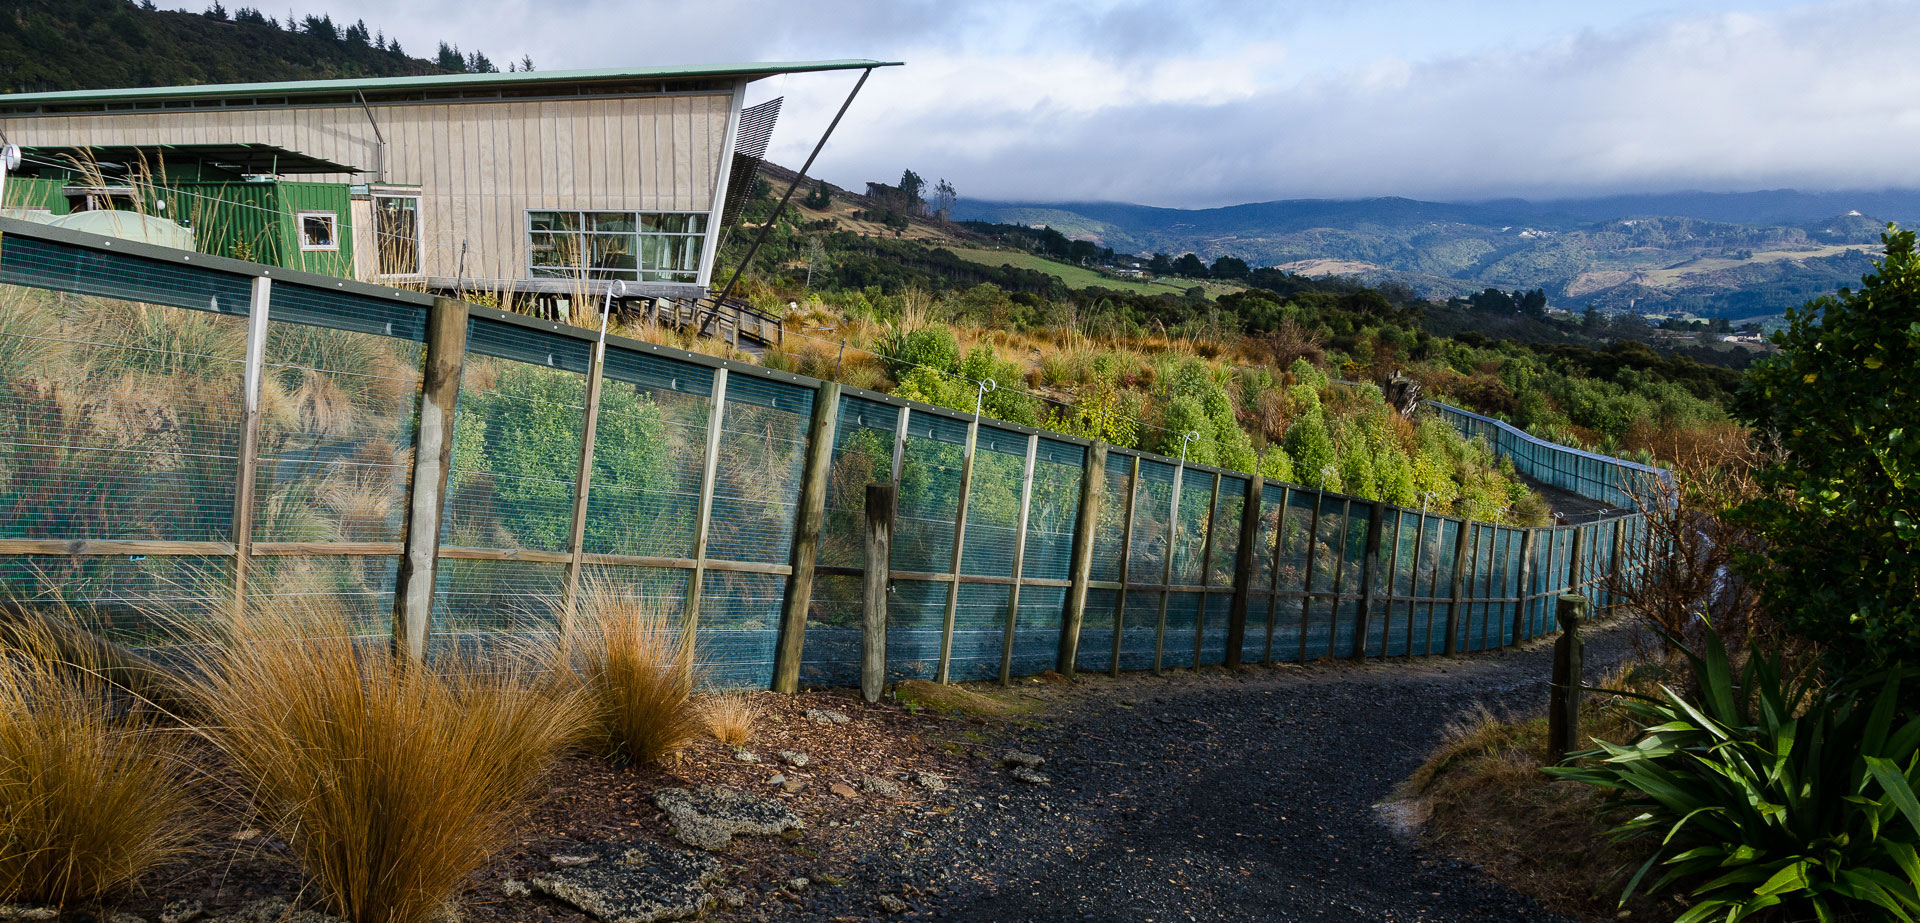 The Orokonui Ecosanctuary, New Zealand